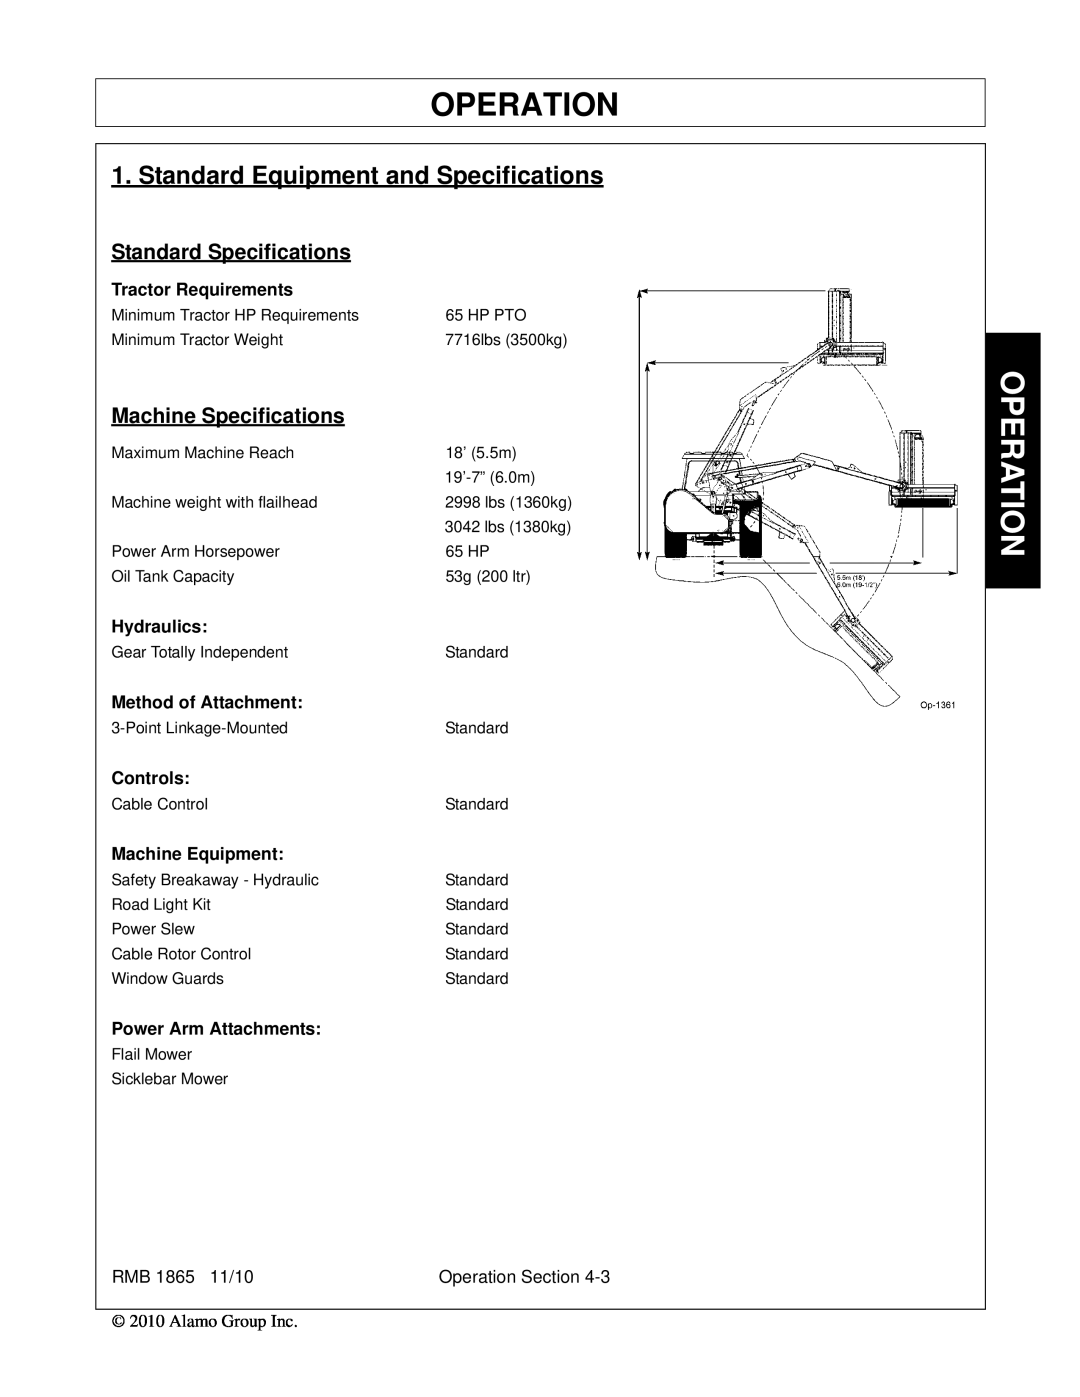 Bush Hog RMB 1865 manual Operation, Standard Equipment and Specifications, Standard Specifications, Machine Specifications 